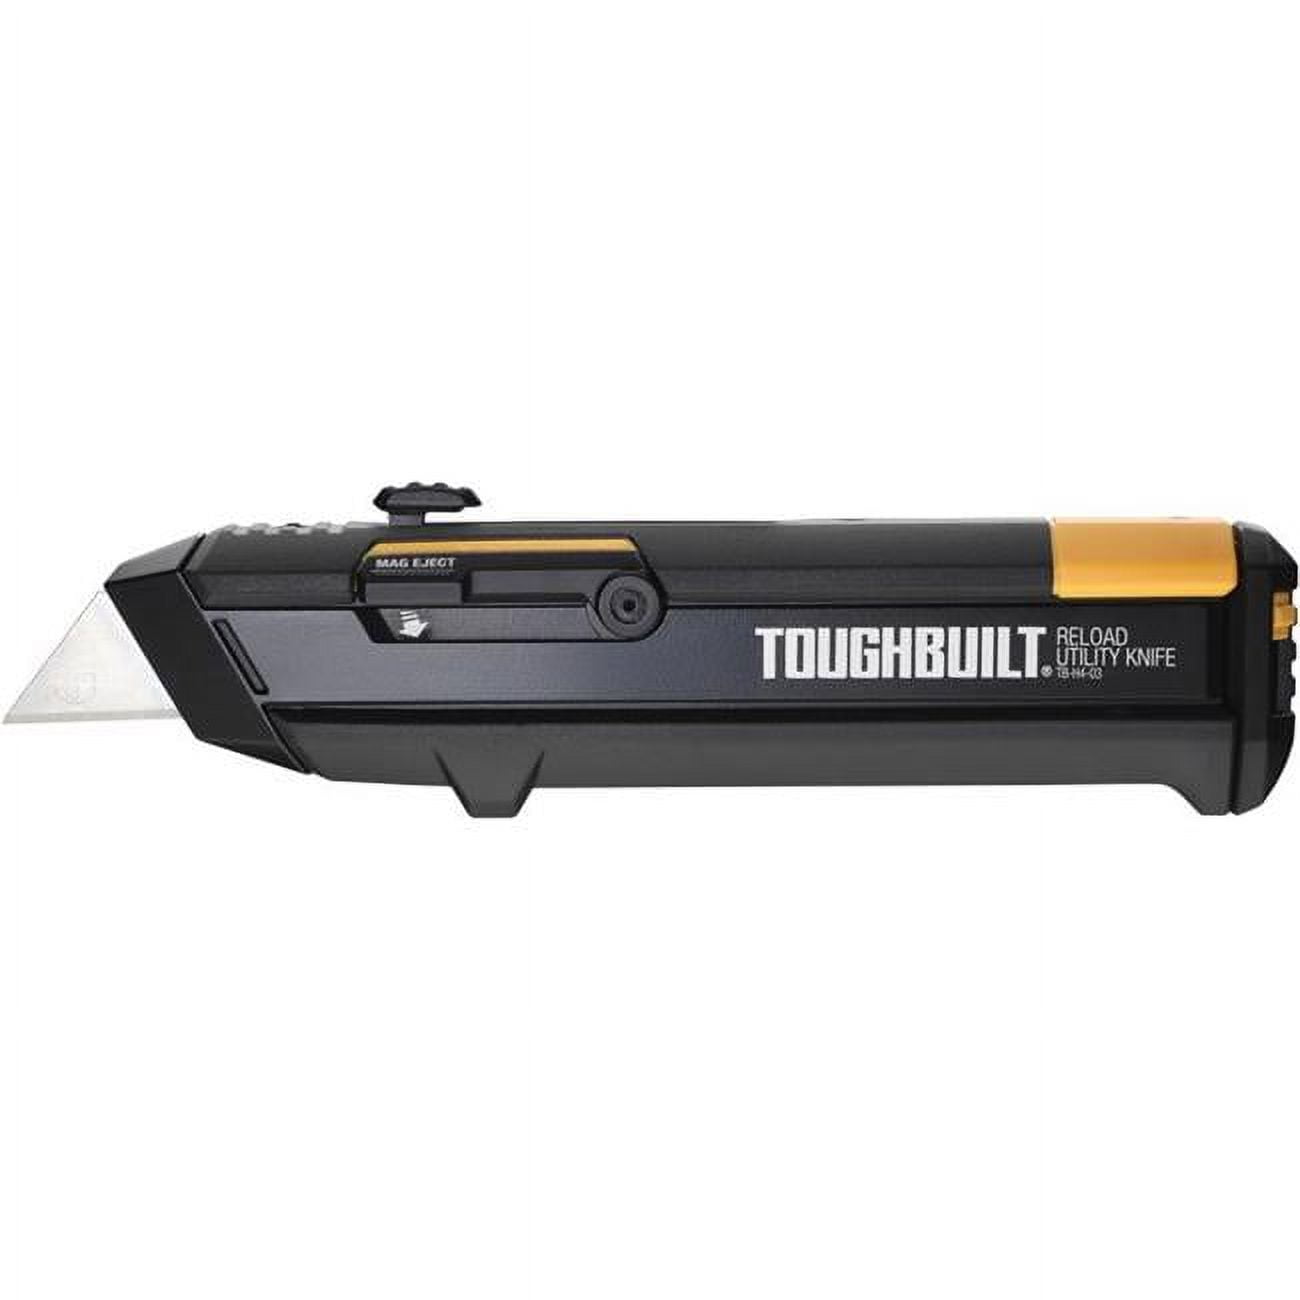 ToughBuilt Reload Utility Knife Review – Fun & Functional